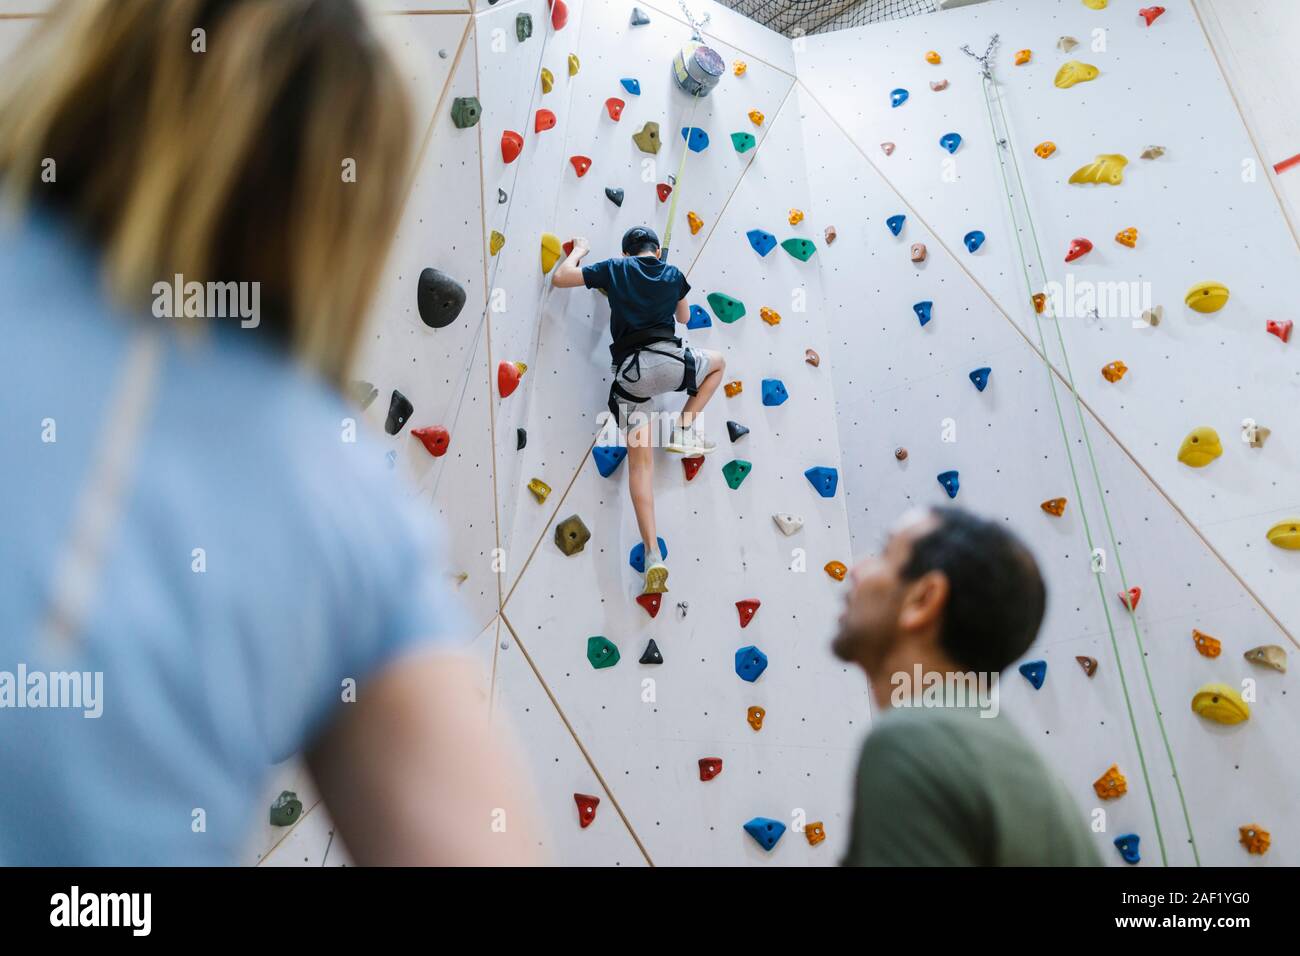 Boy on climbing wall Stock Photo - Alamy